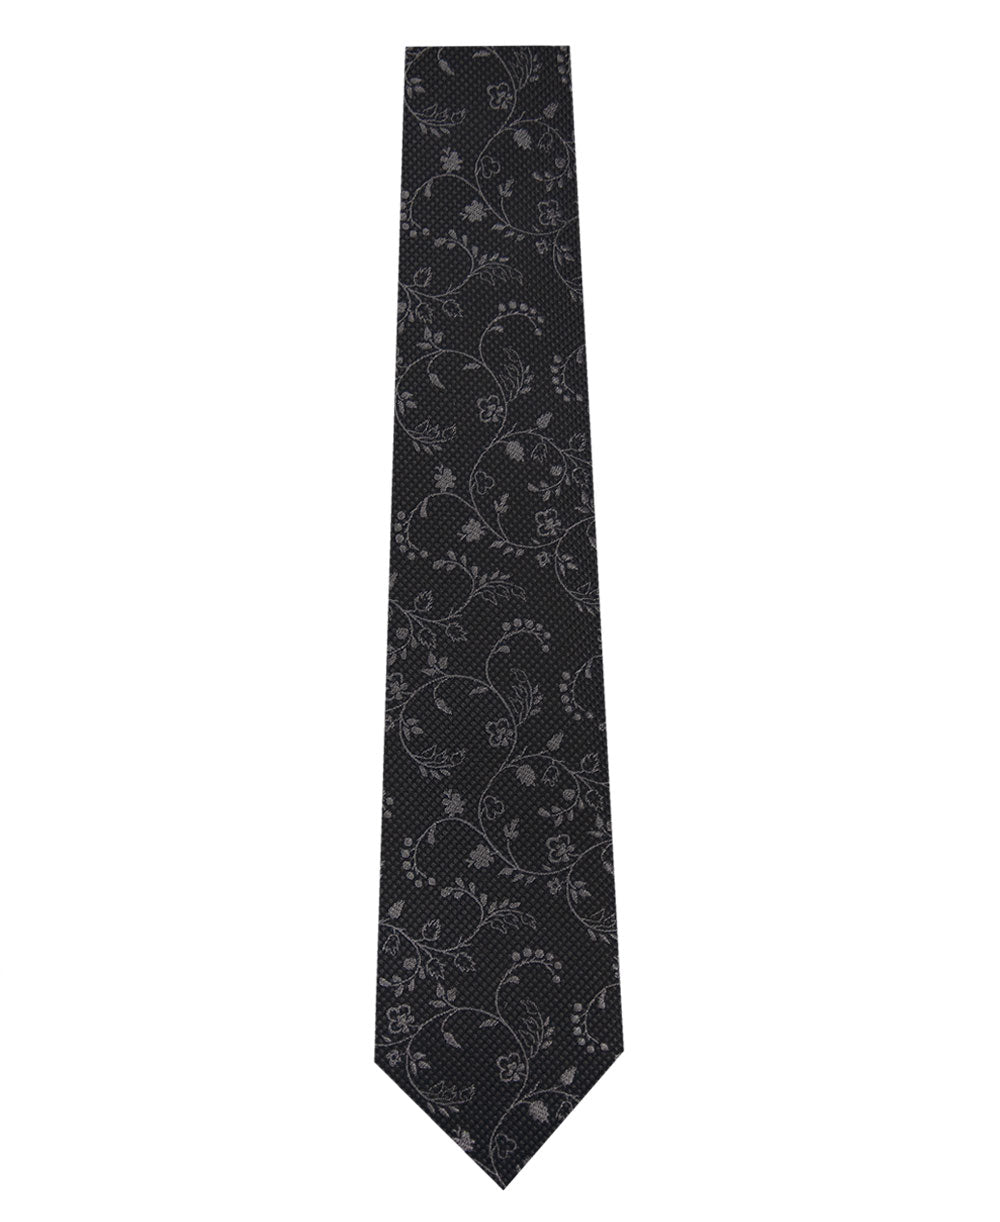 Black and Grey Floral Design Silk Tie Long